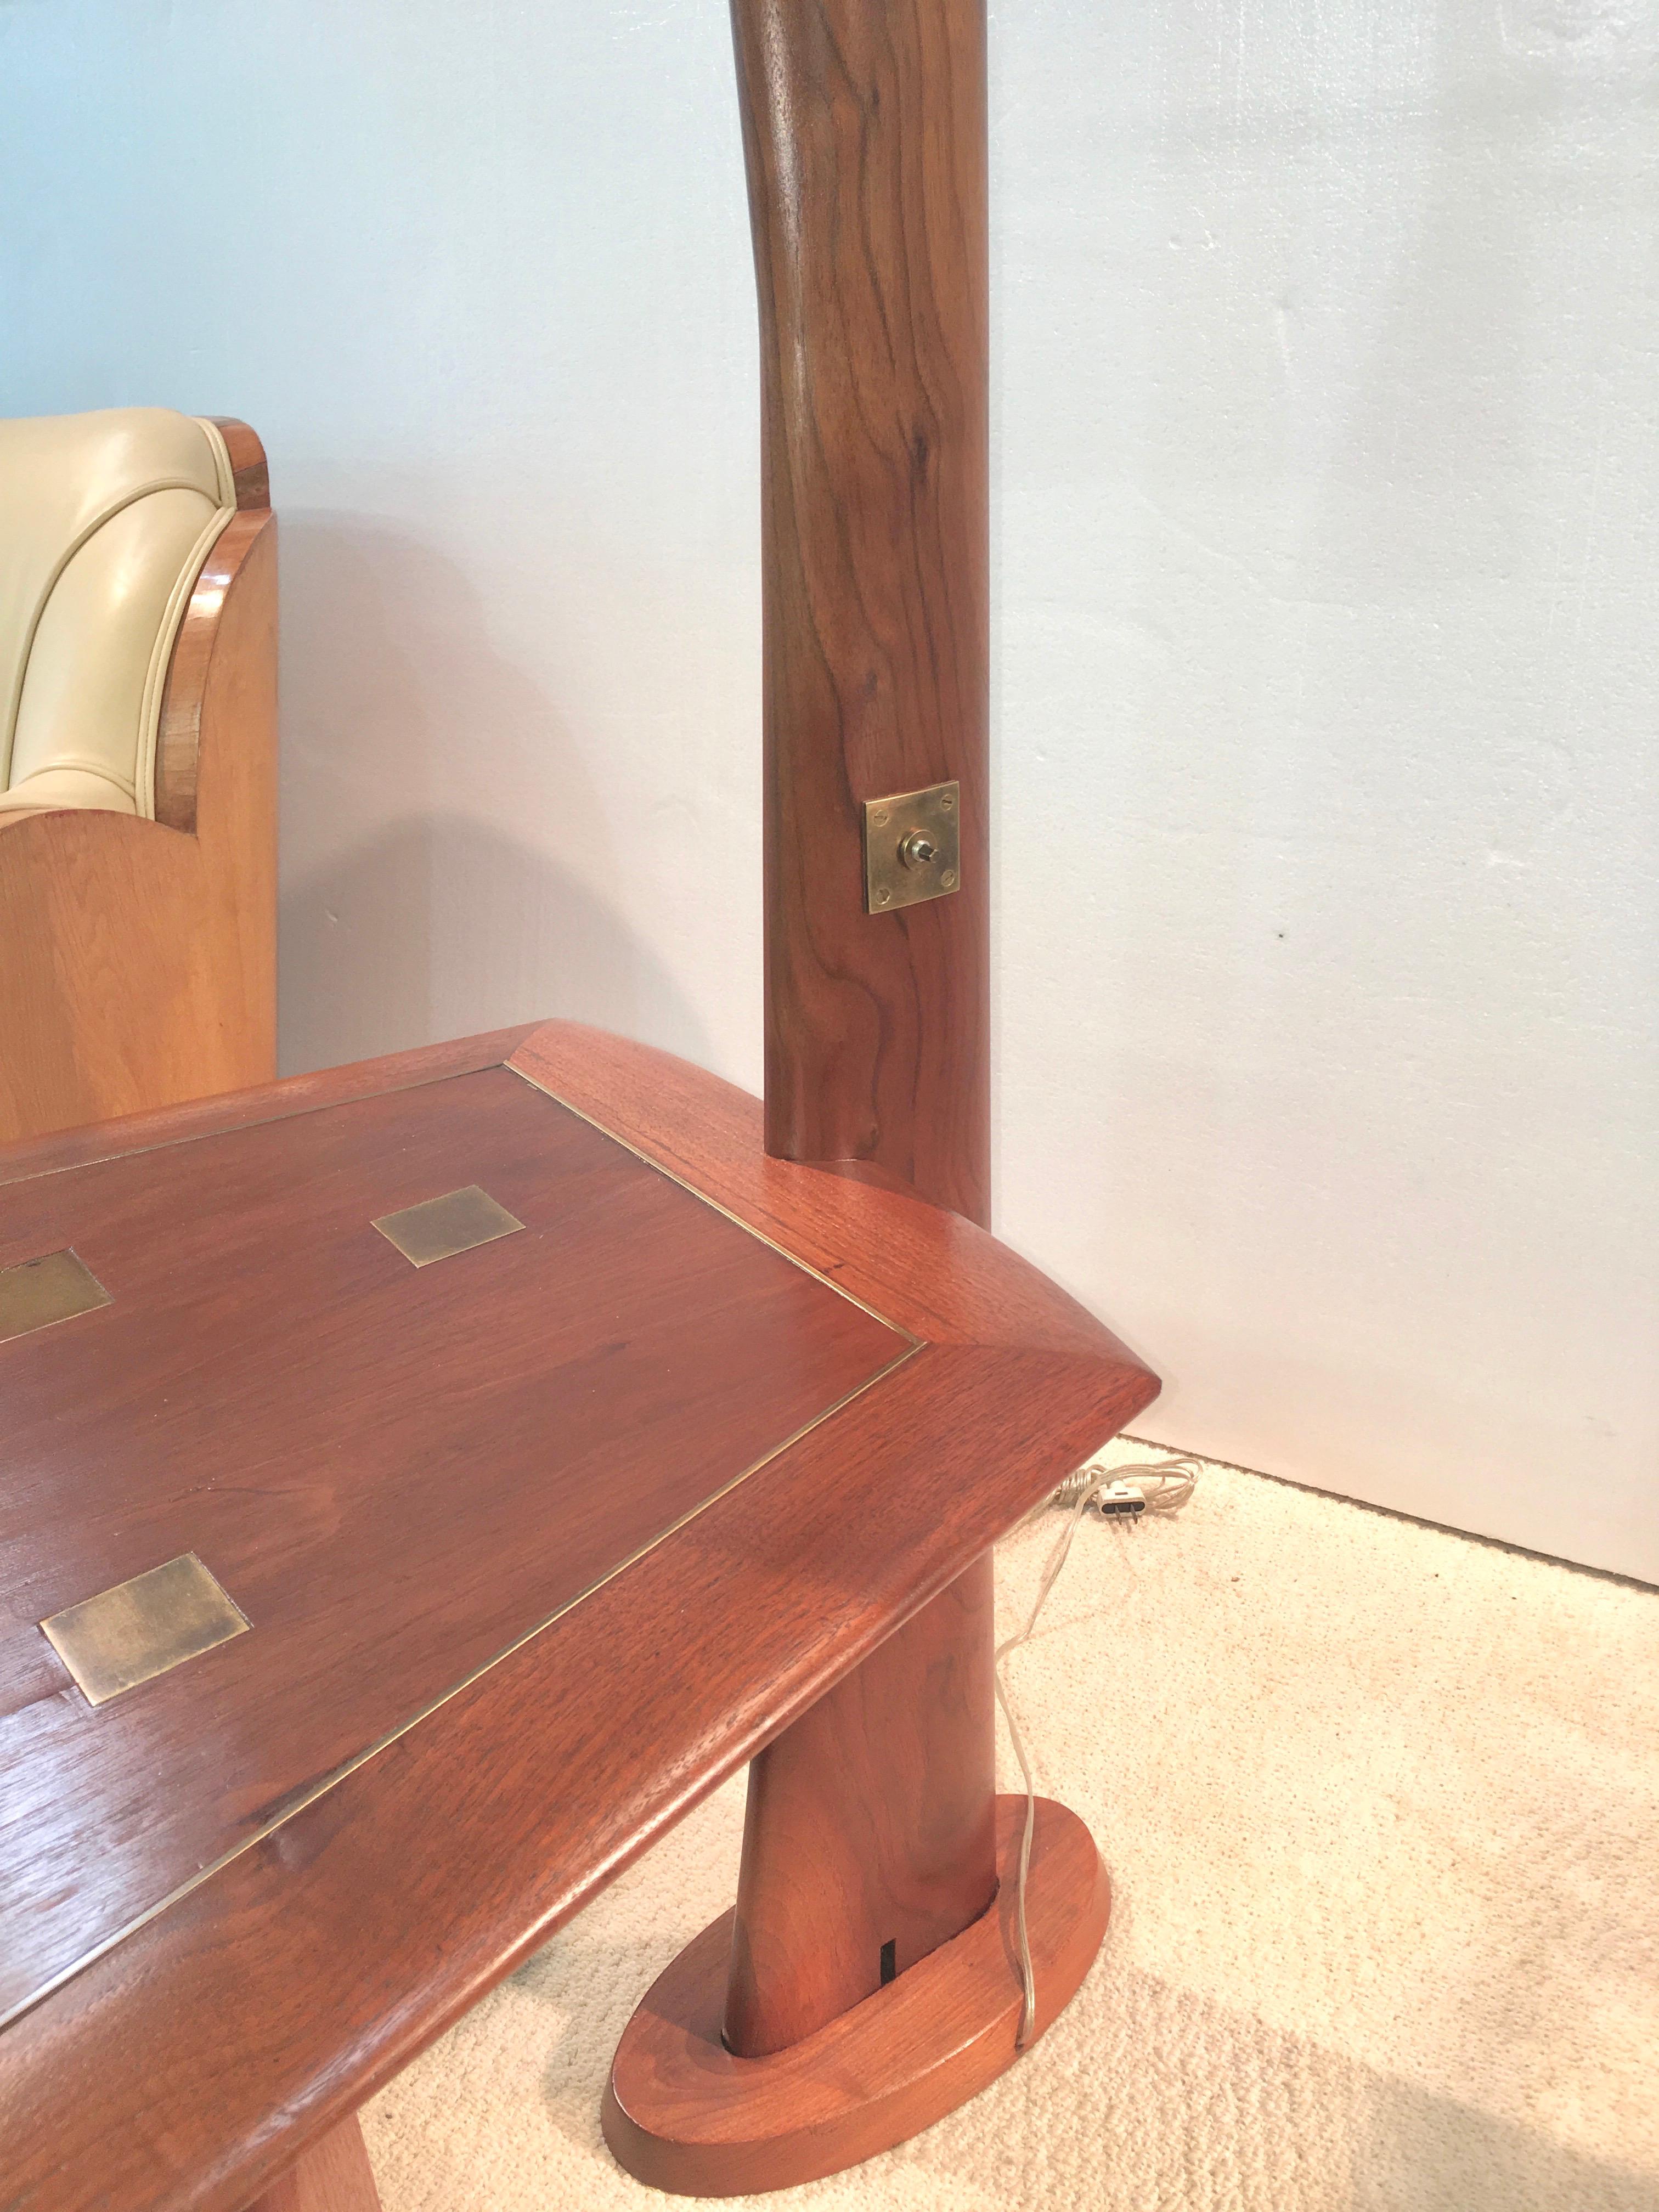 Samson Berman Studio Floor Lamp with Integrated Table For Sale 2